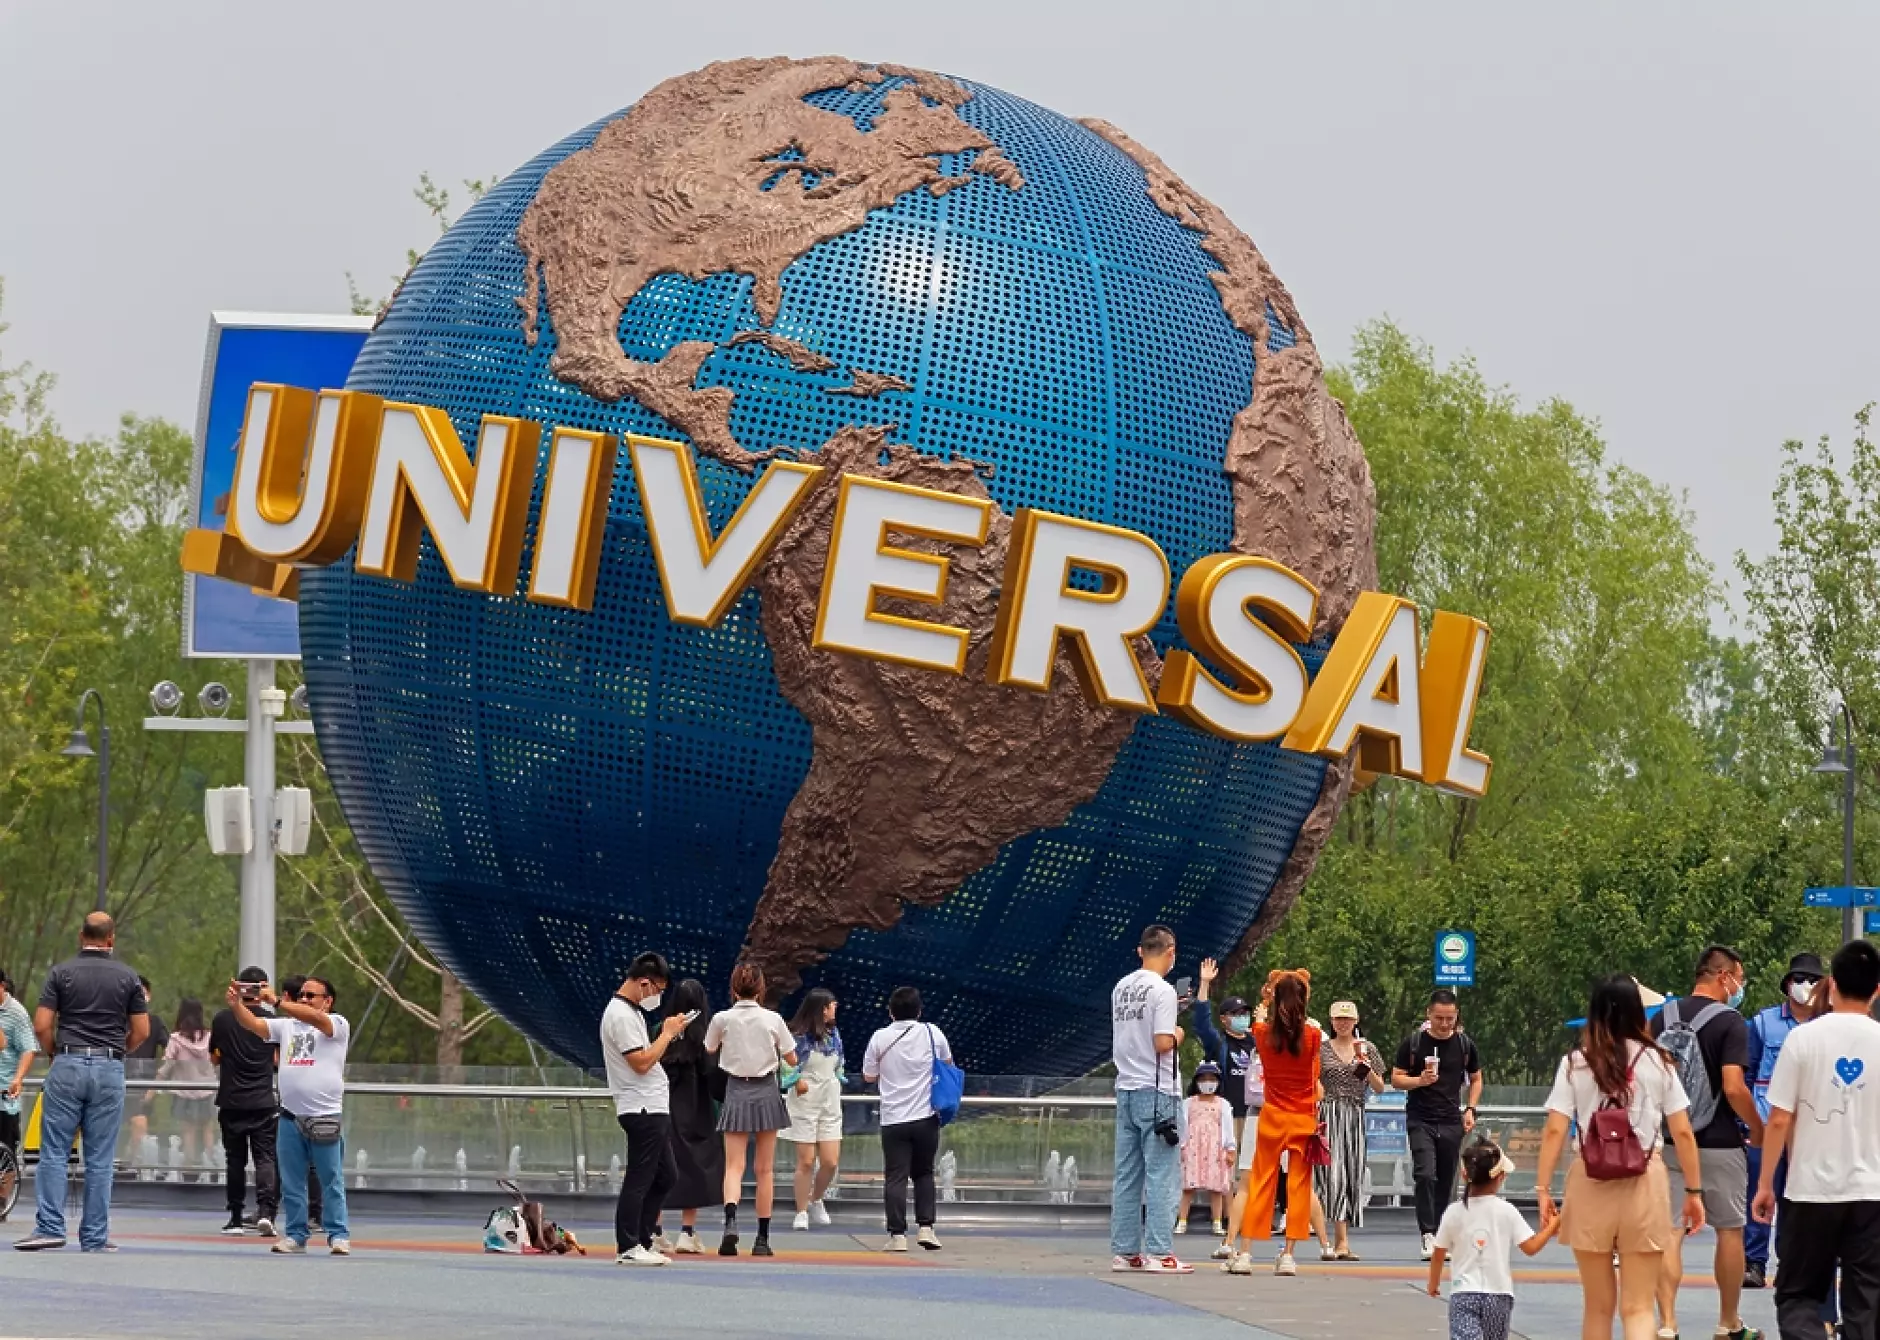 Китайските власти затвориха Universal Resort заради COVID-19 в Пекин